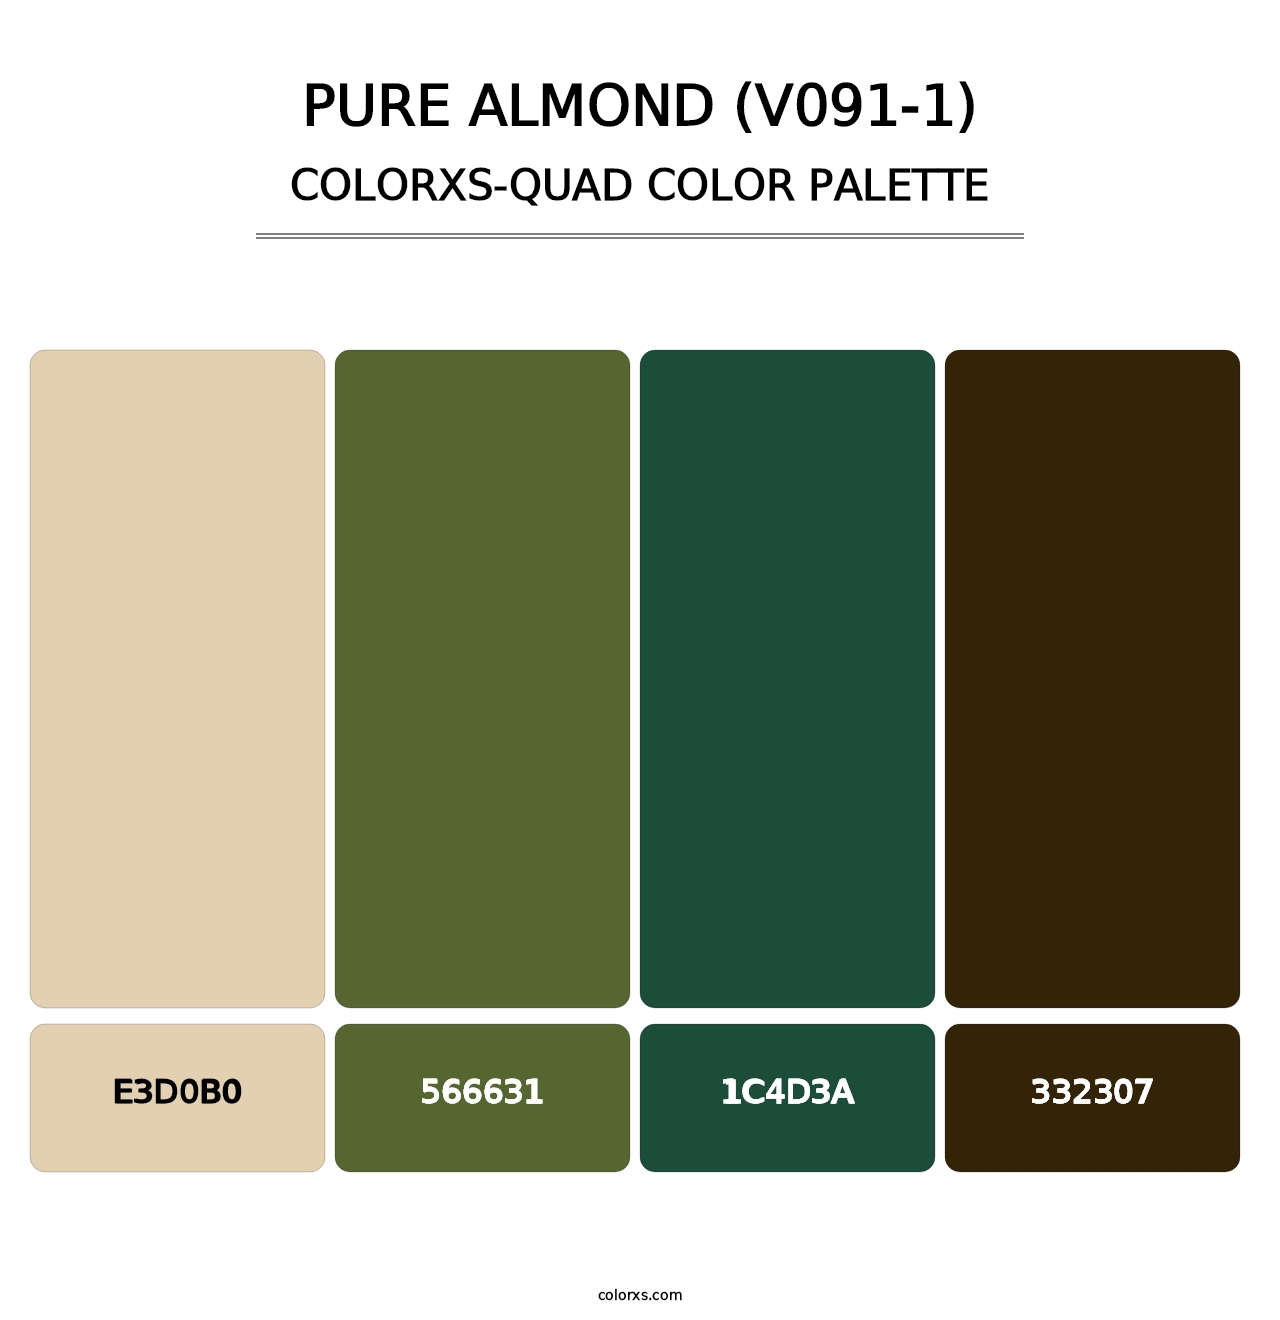 Pure Almond (V091-1) - Colorxs Quad Palette